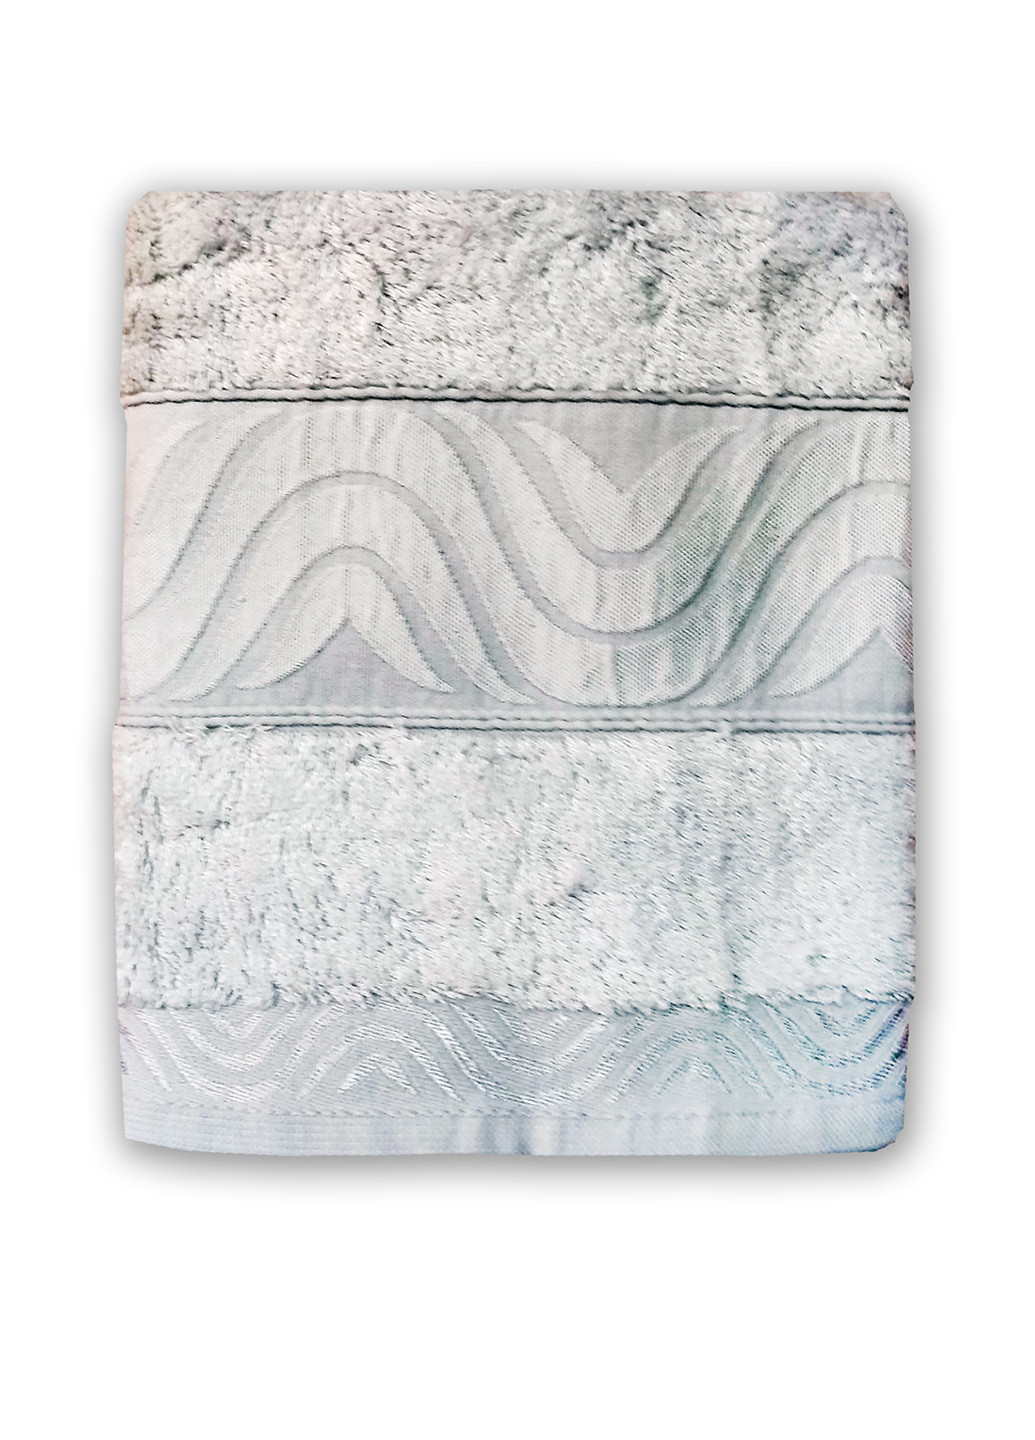 No Brand полотенце, 50х90 см однотонный серый производство - Турция